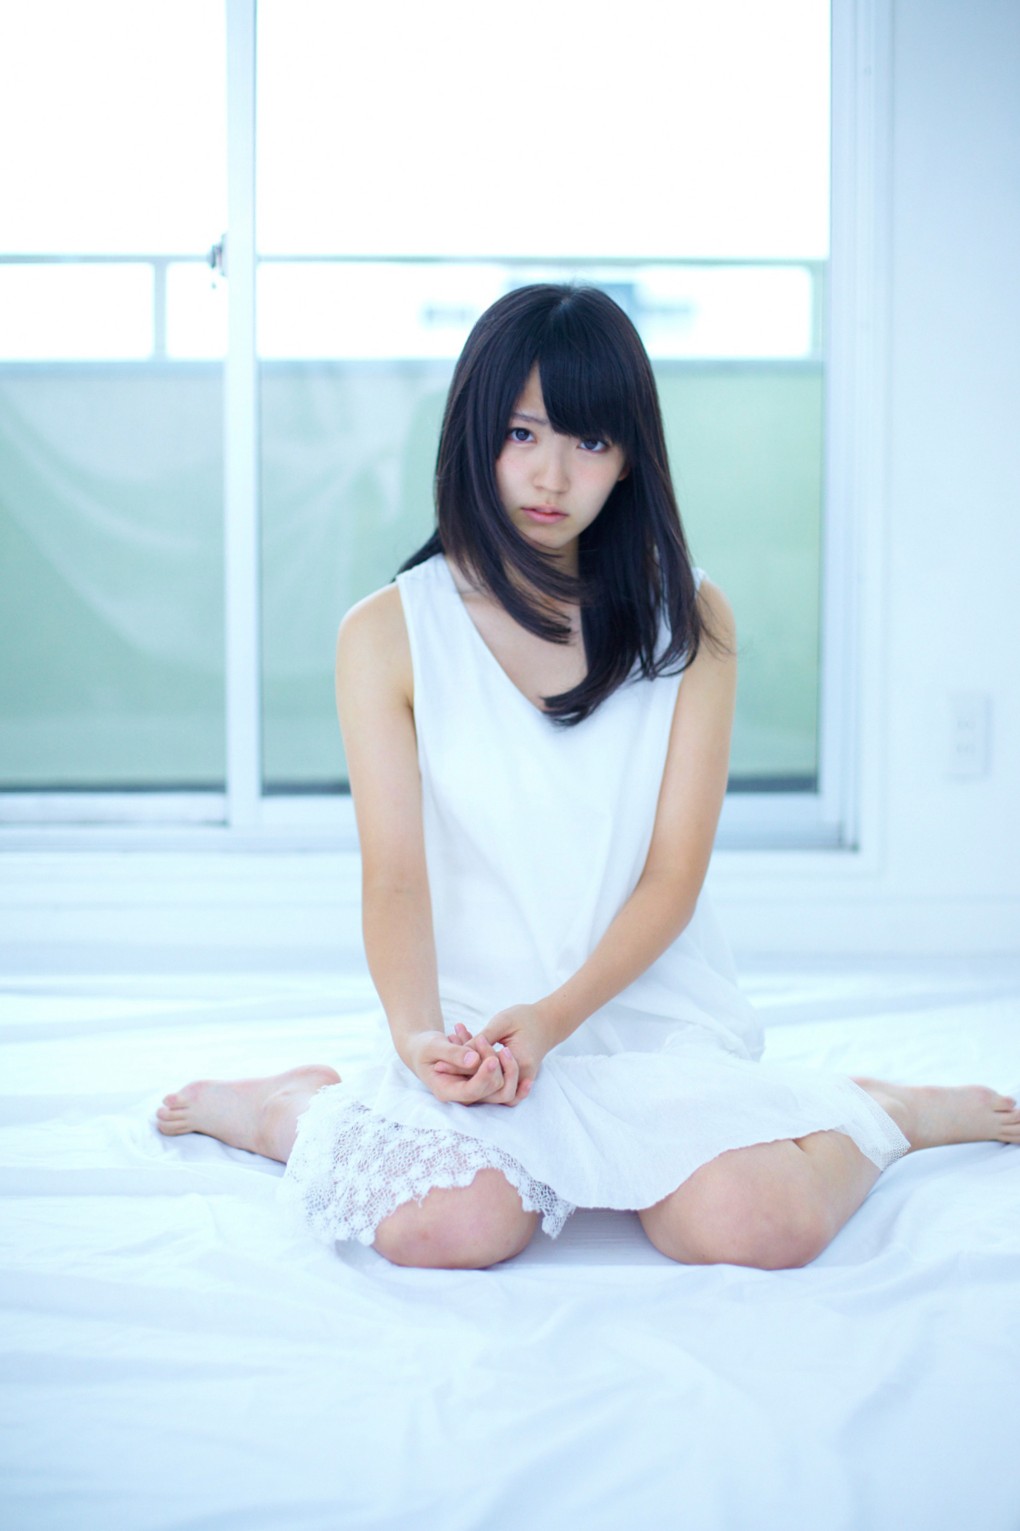 Airi Suzuki Asian Women White Dress Sitting Long Hair Japanese Women Japanese 1020x1531